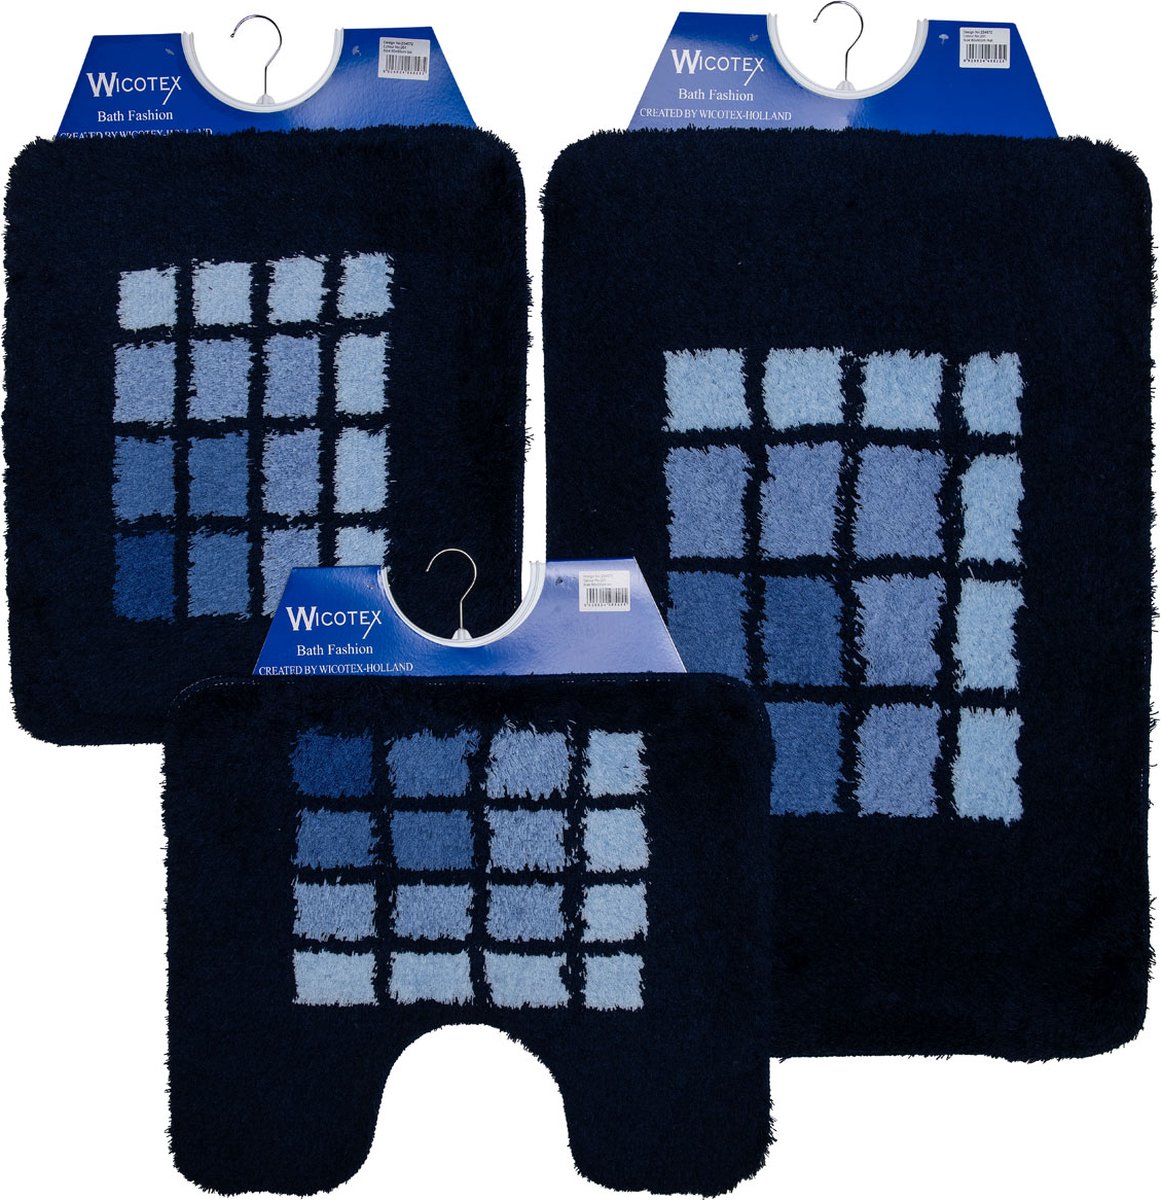 Wicotex - Badmat set - Badmat - Toiletmat - Bidetmat Blauwe rand geblokt - Antislip onderkant - WC mat met uitsparing